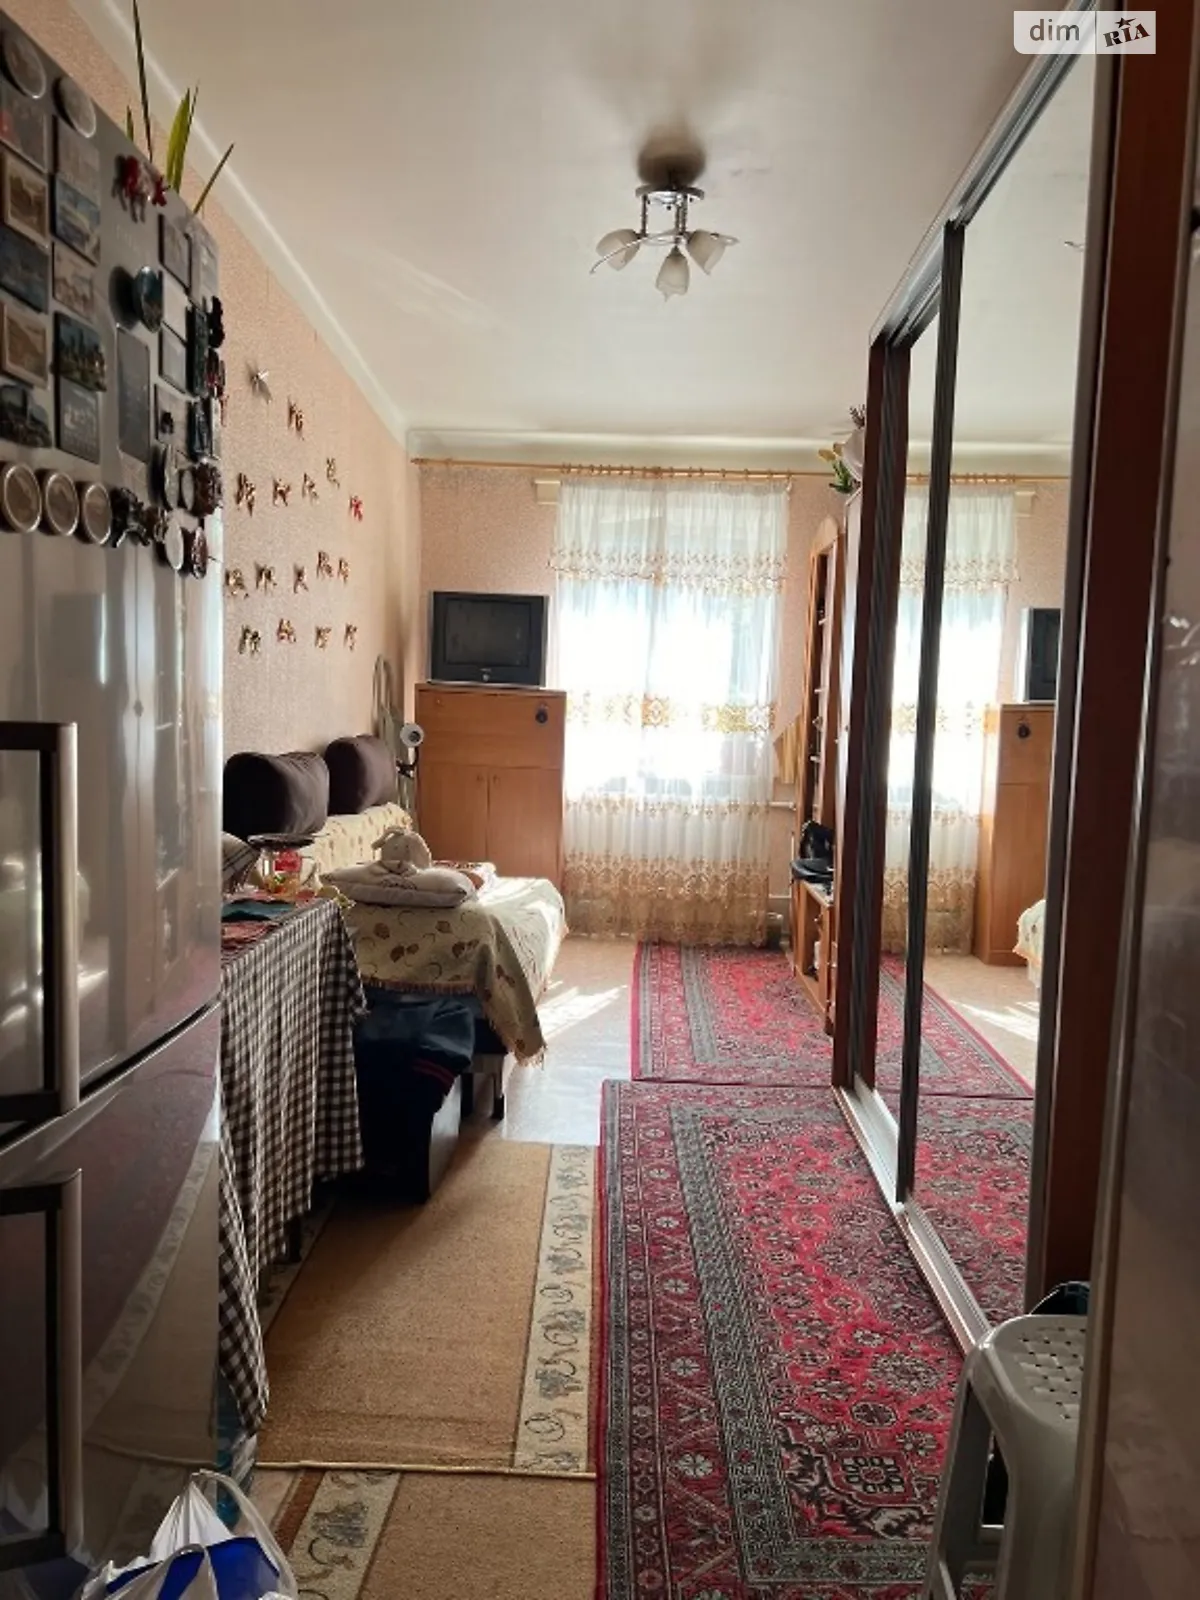 Продается комната 13.7 кв. м в Одессе, цена: 12000 $ - фото 1